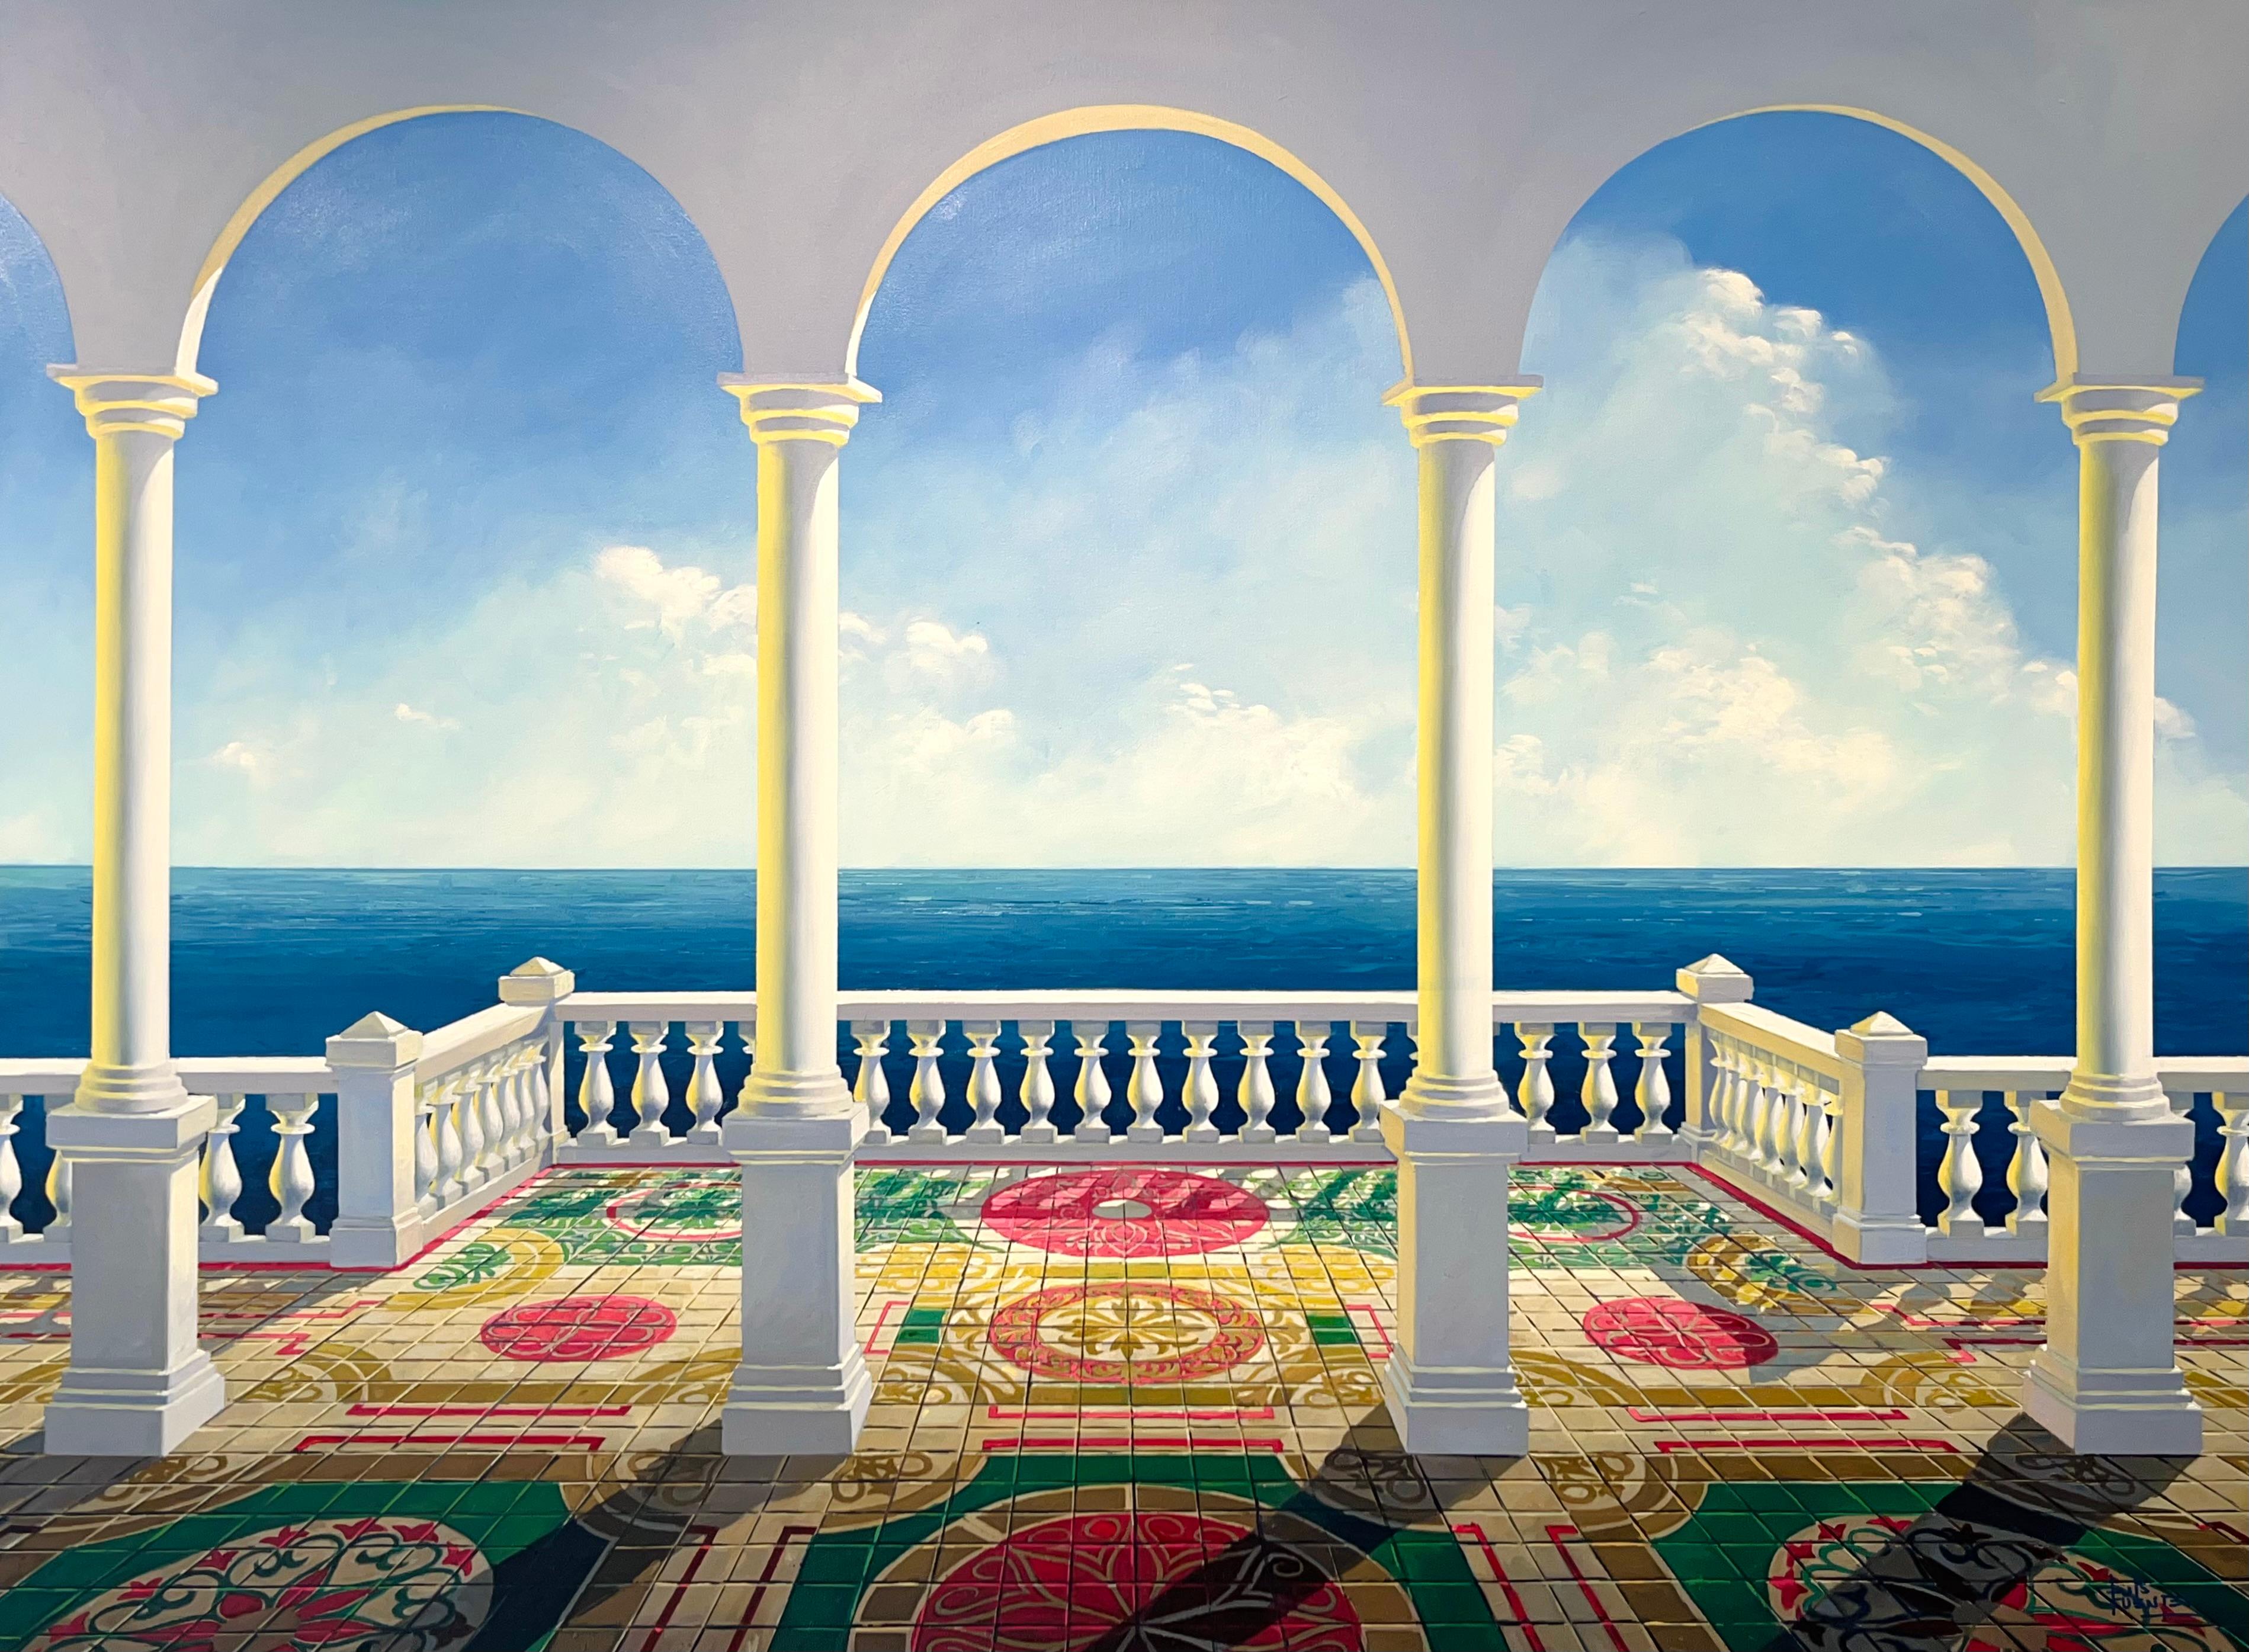 Arches of Dreams-original interior sea landscape still life realism oil painting